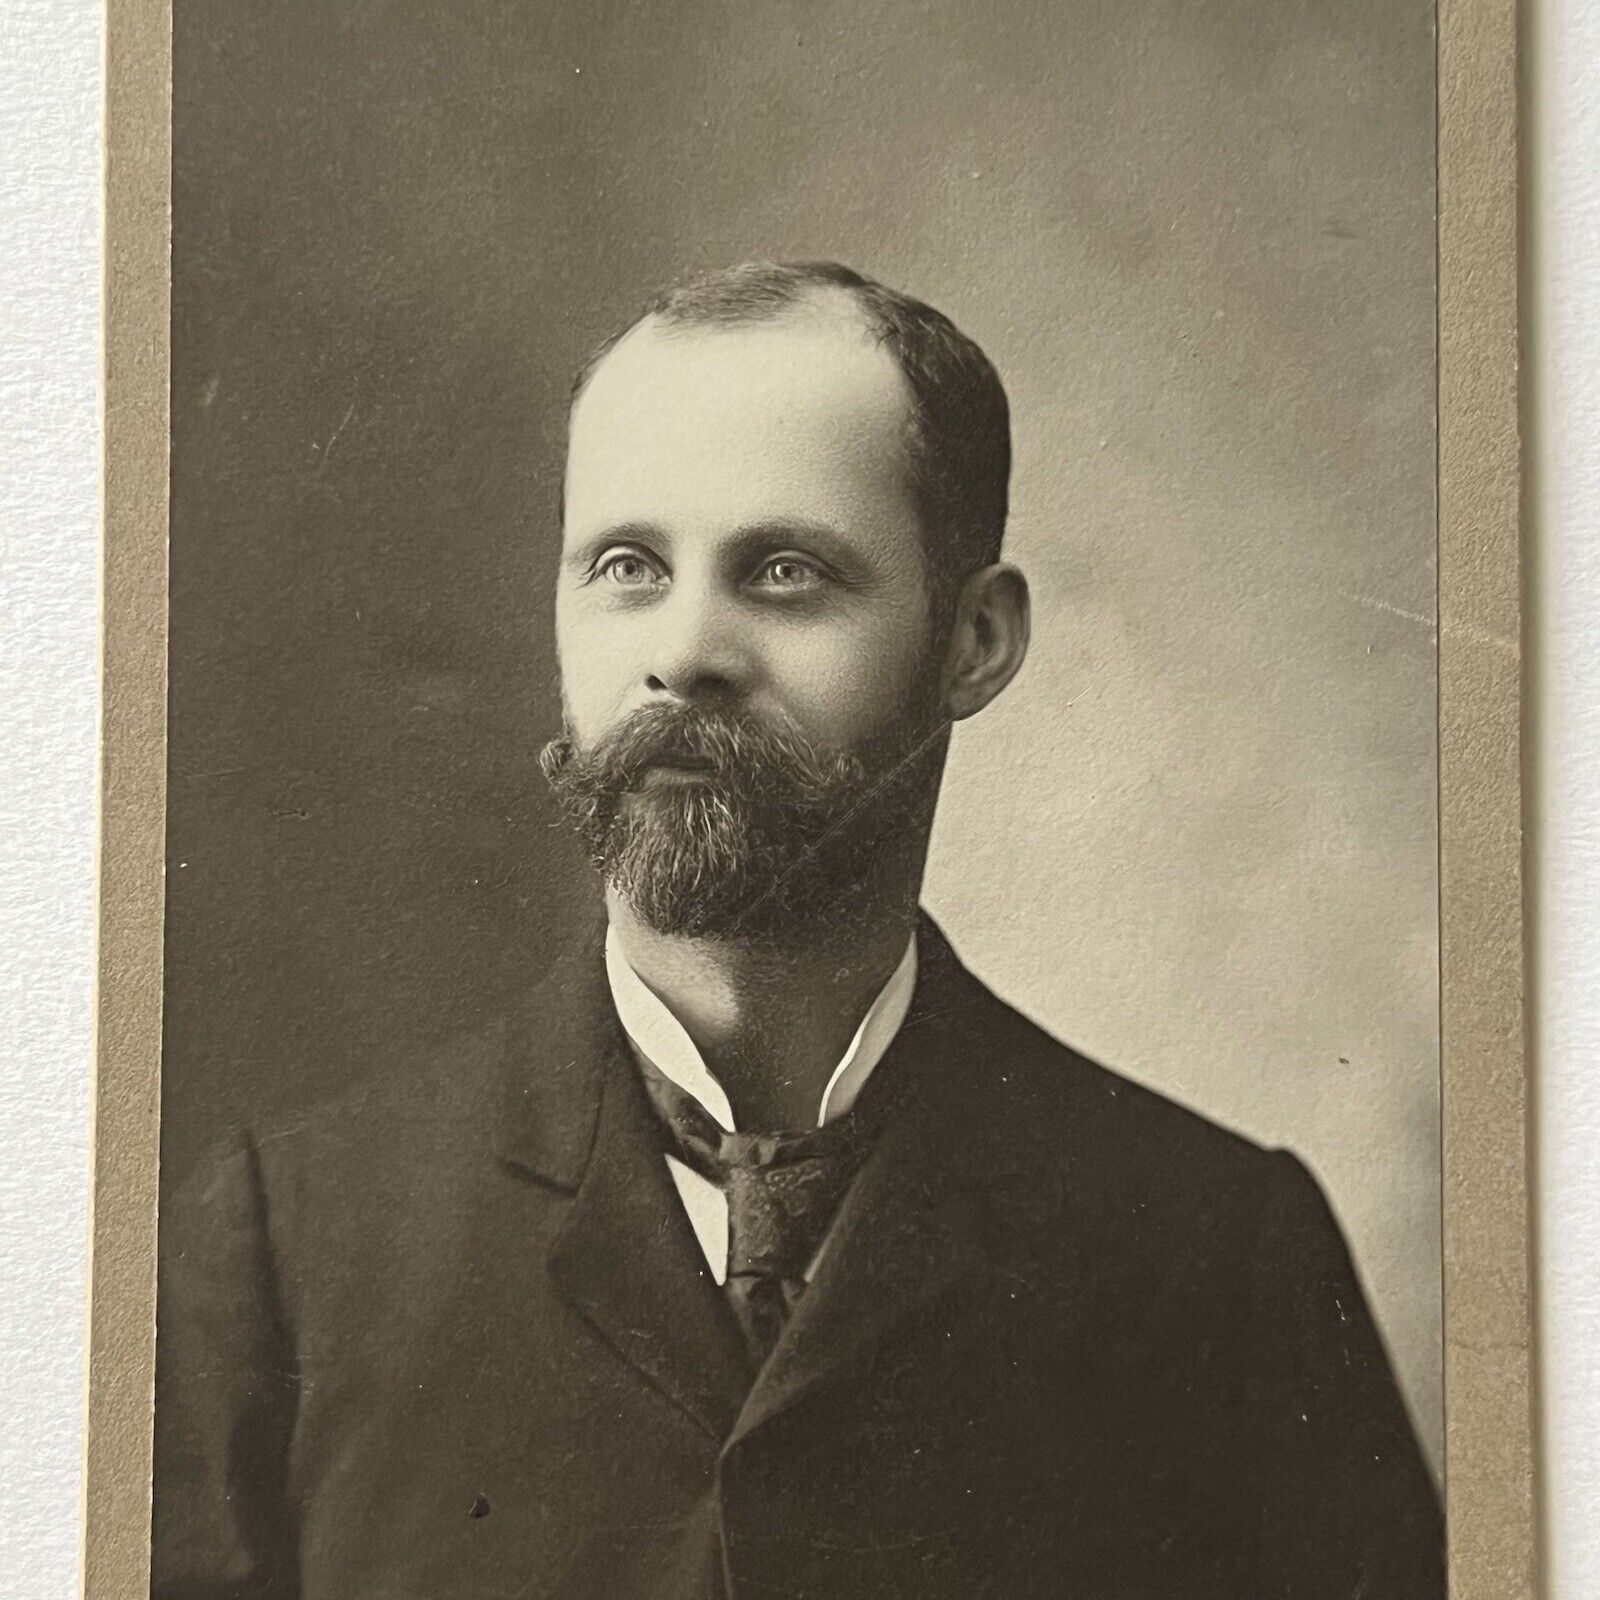 Antique Cabinet Card Photograph Charming Man Beard Suit Minneapolis MN